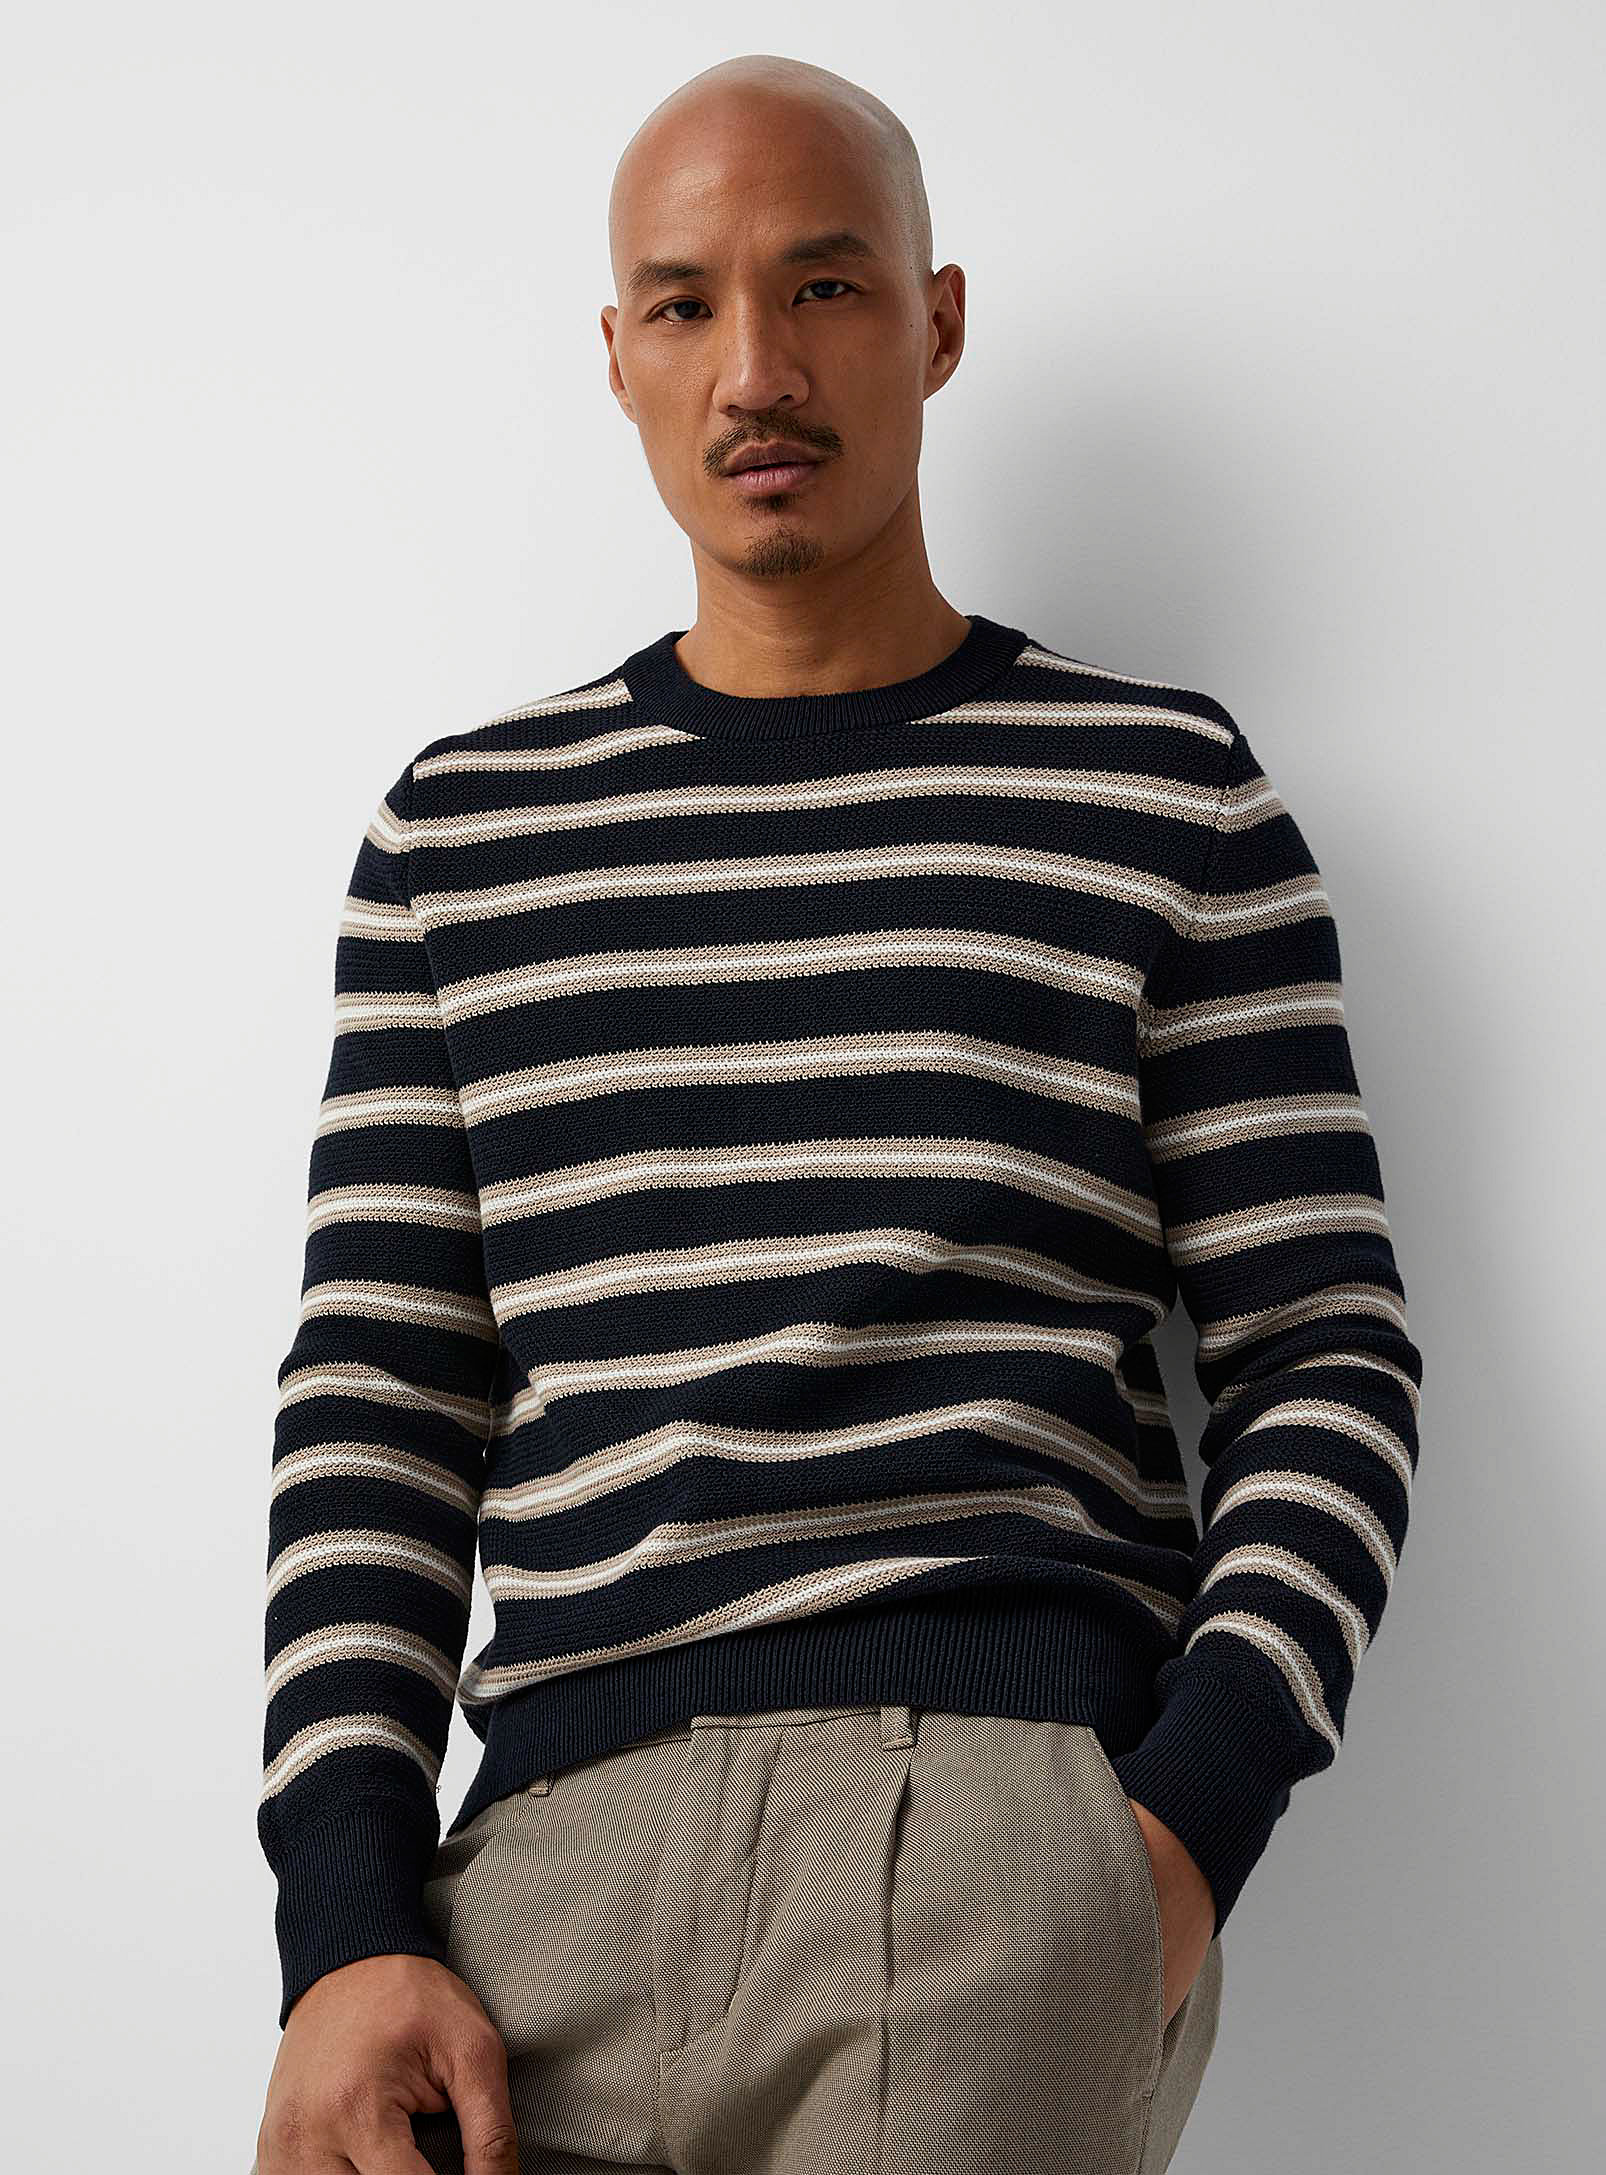 Marc O'Polo - Le chandail rayé tricot pur coton bio